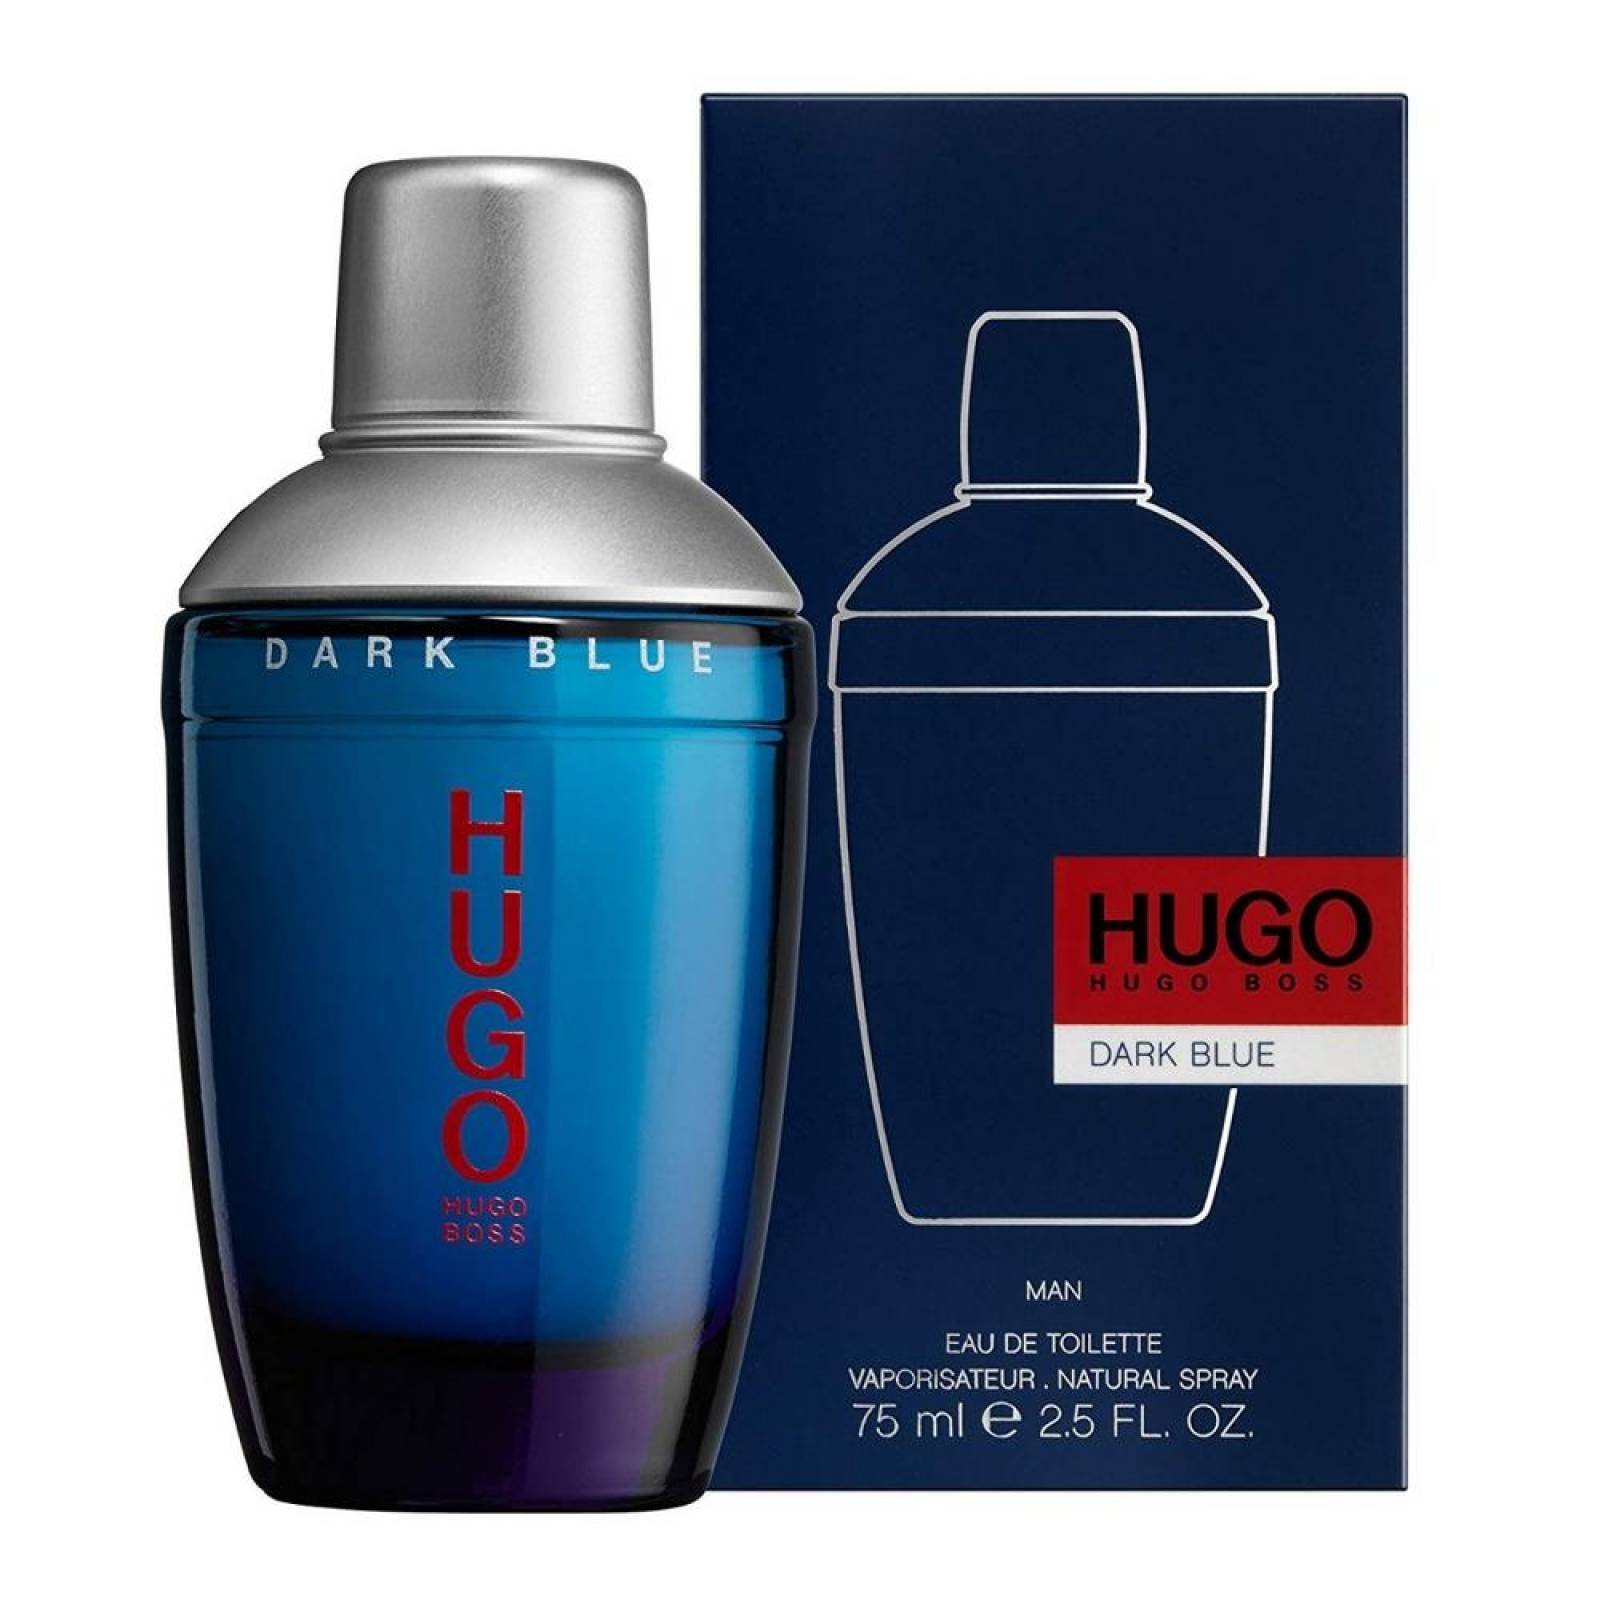 Dark Blue de Hugo Boss caballero de 75 ml